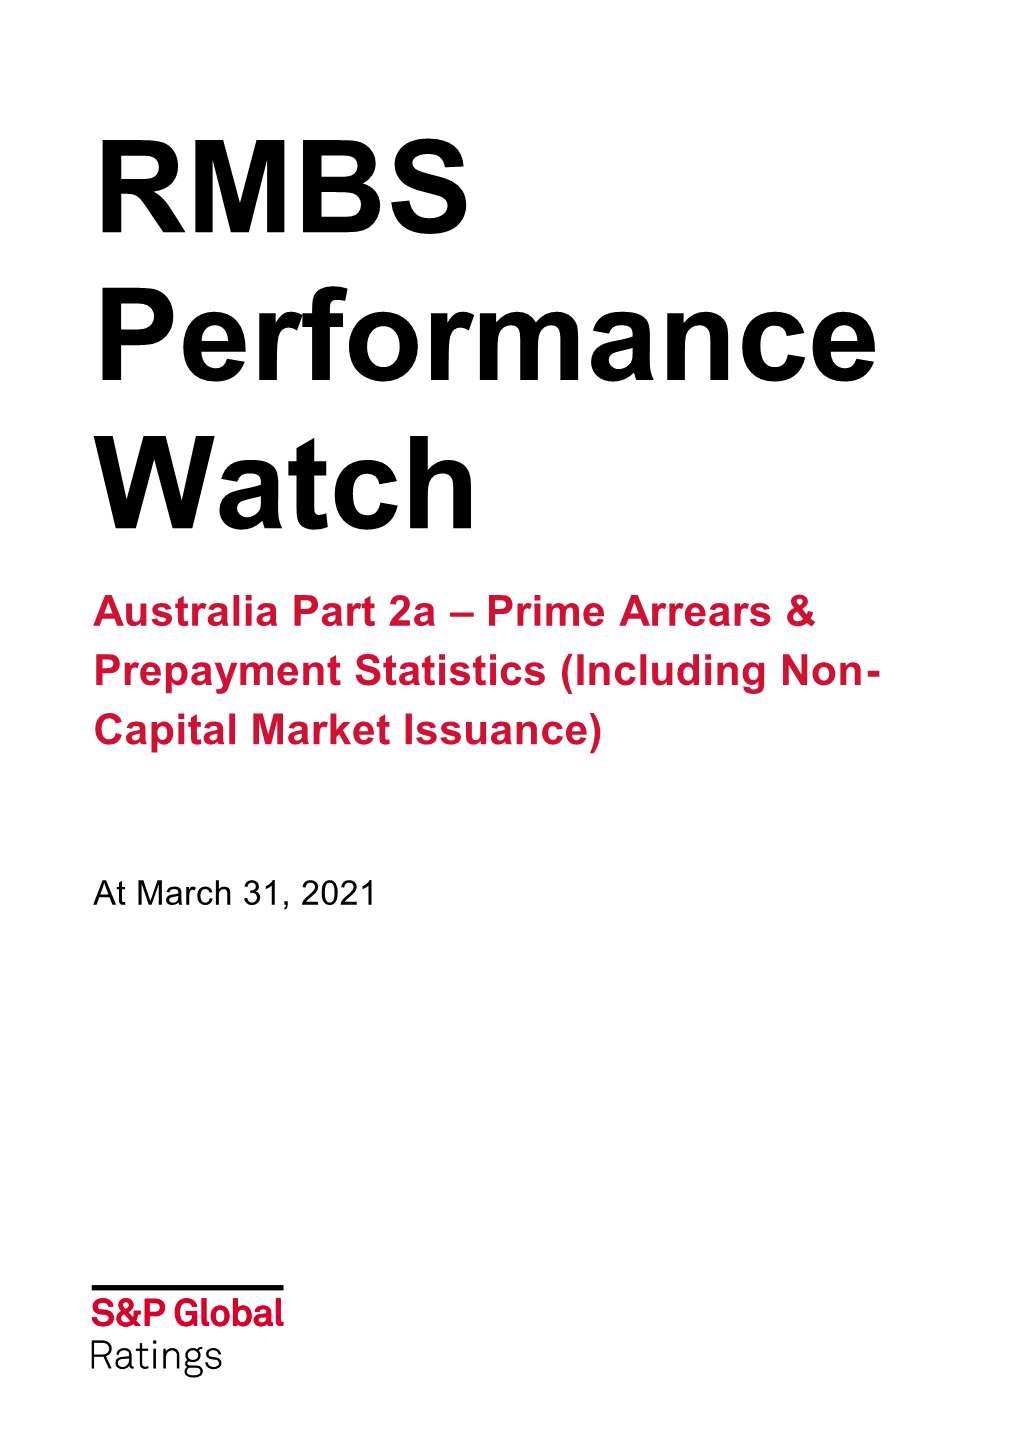 Prime Arrears & Prepayment Statistics